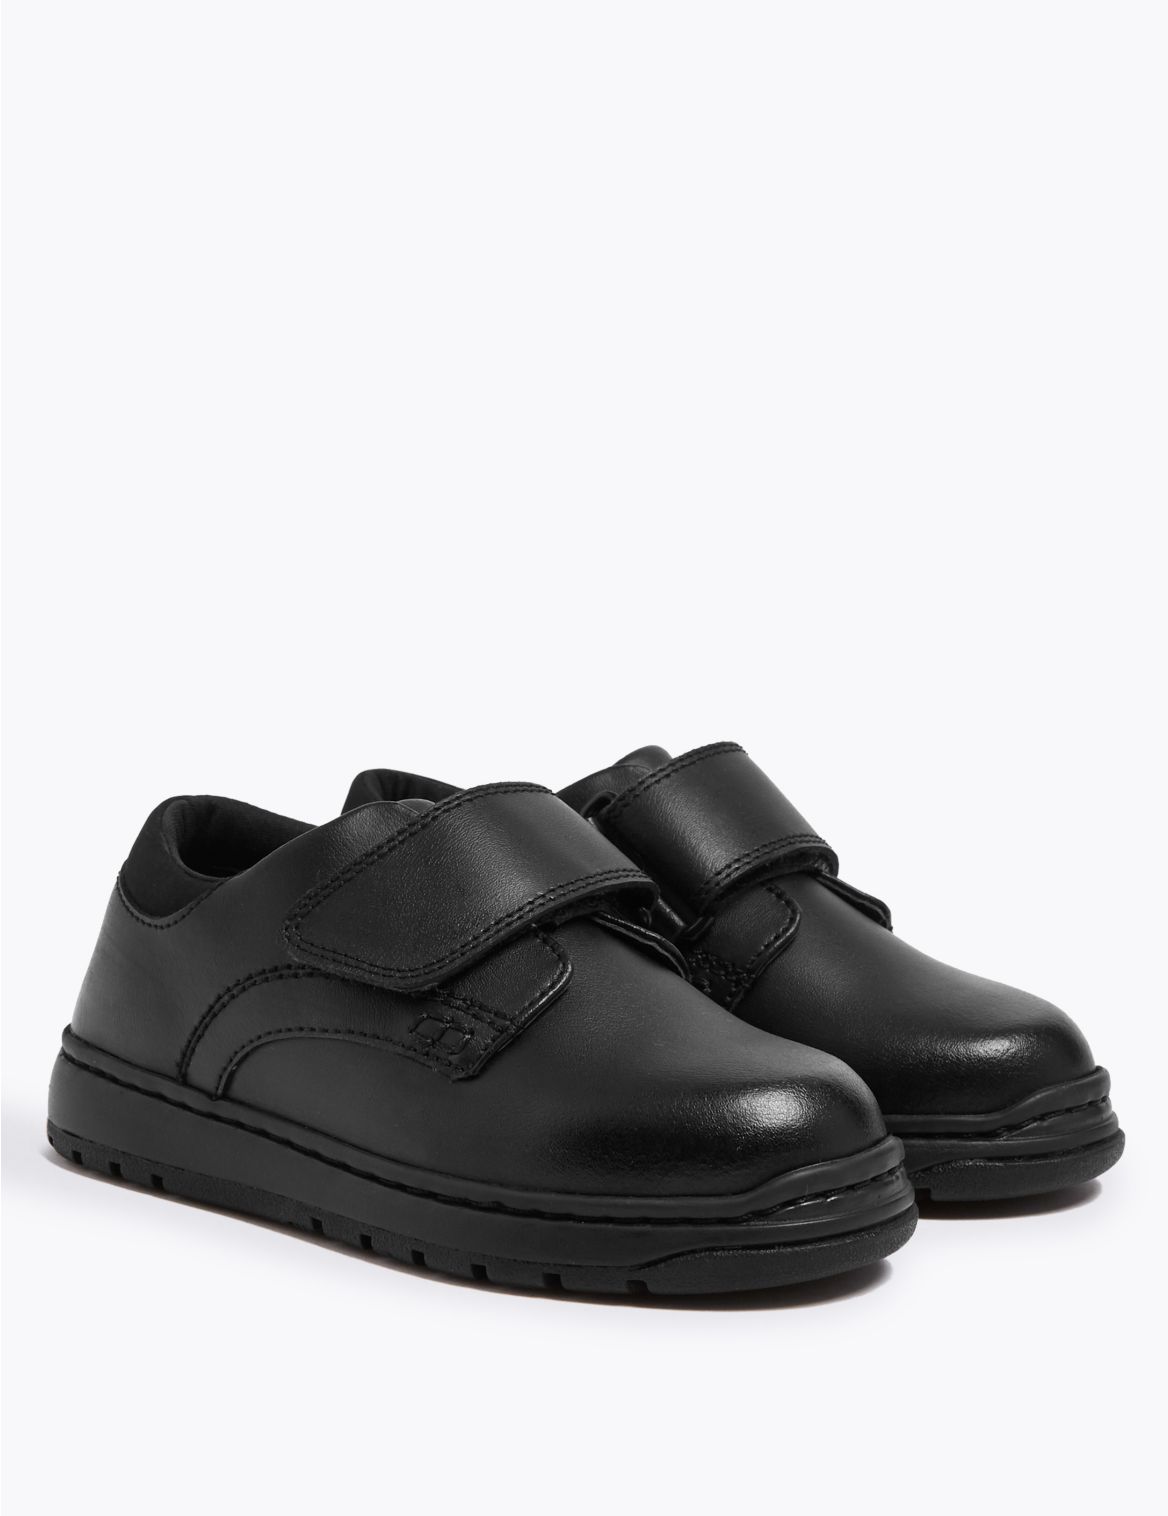 Kids’ Leather Riptape School Shoes (8 Small - 1 Large) black